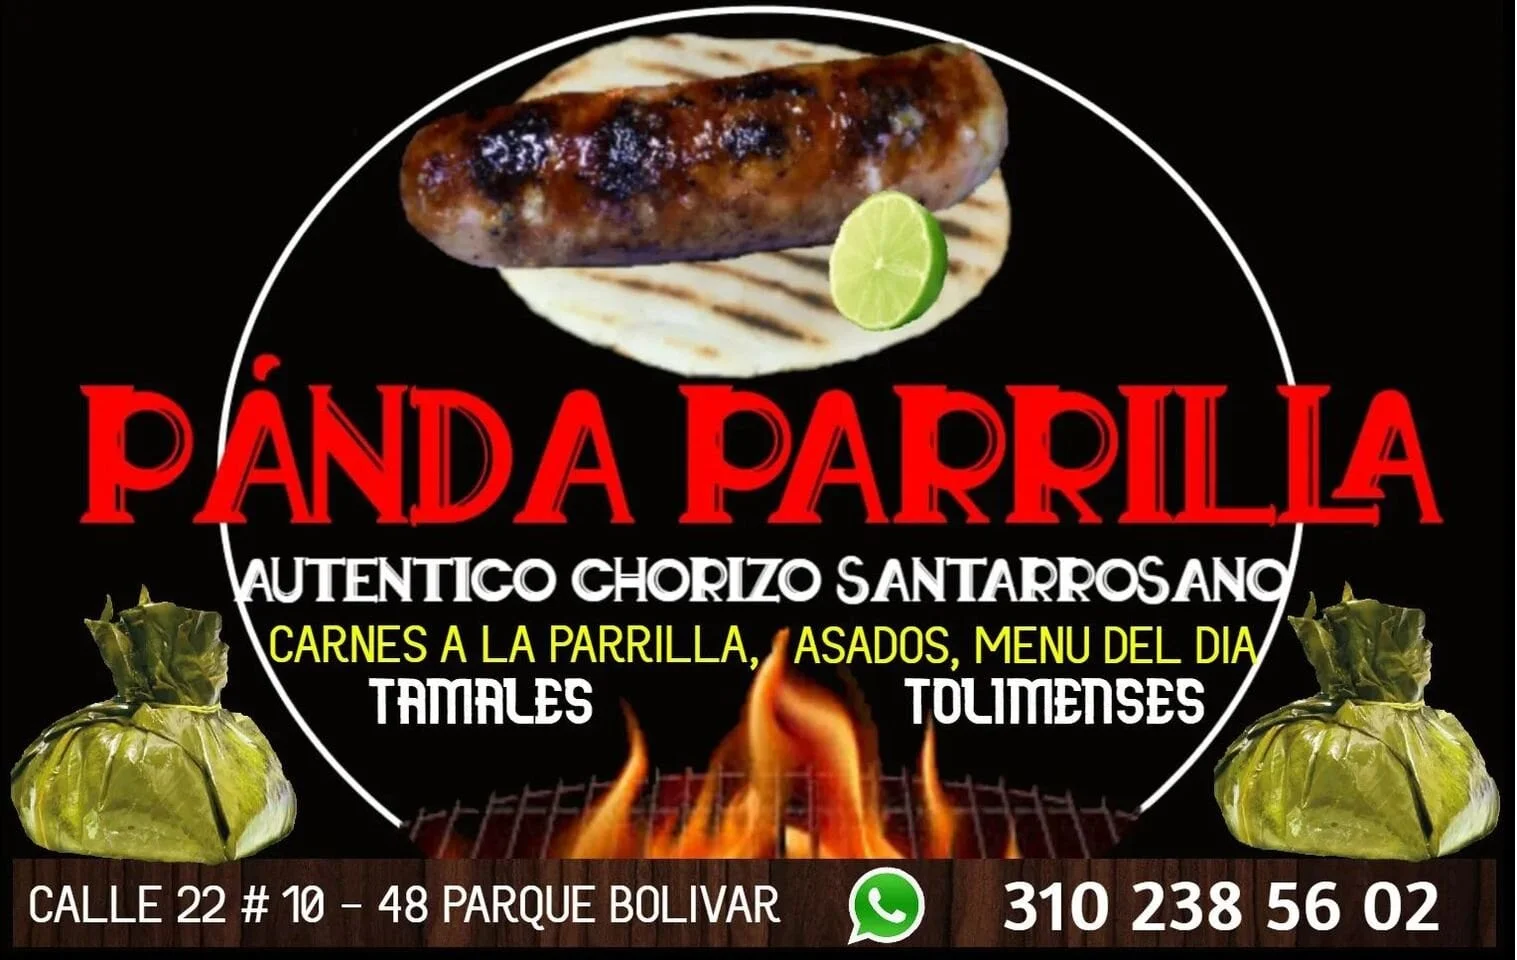 Restaurante-restaurante-panda-parrilla-23821